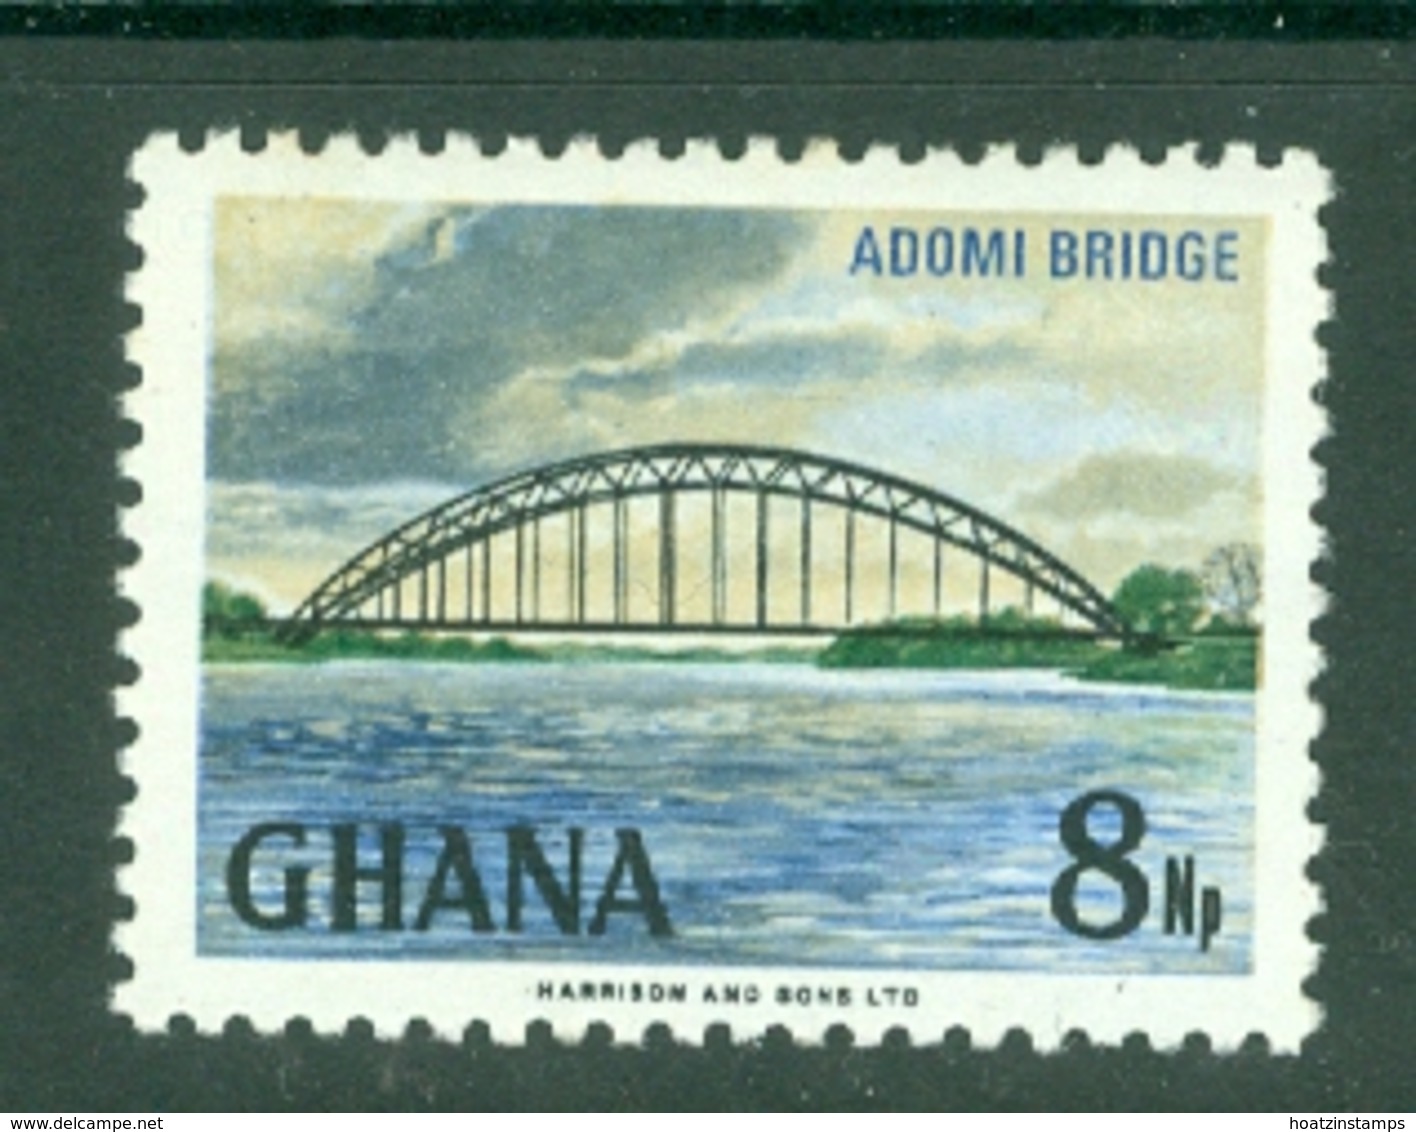 Ghana: 1967   Pictorial - New Currency   SG467   8np   MH - Ghana (1957-...)